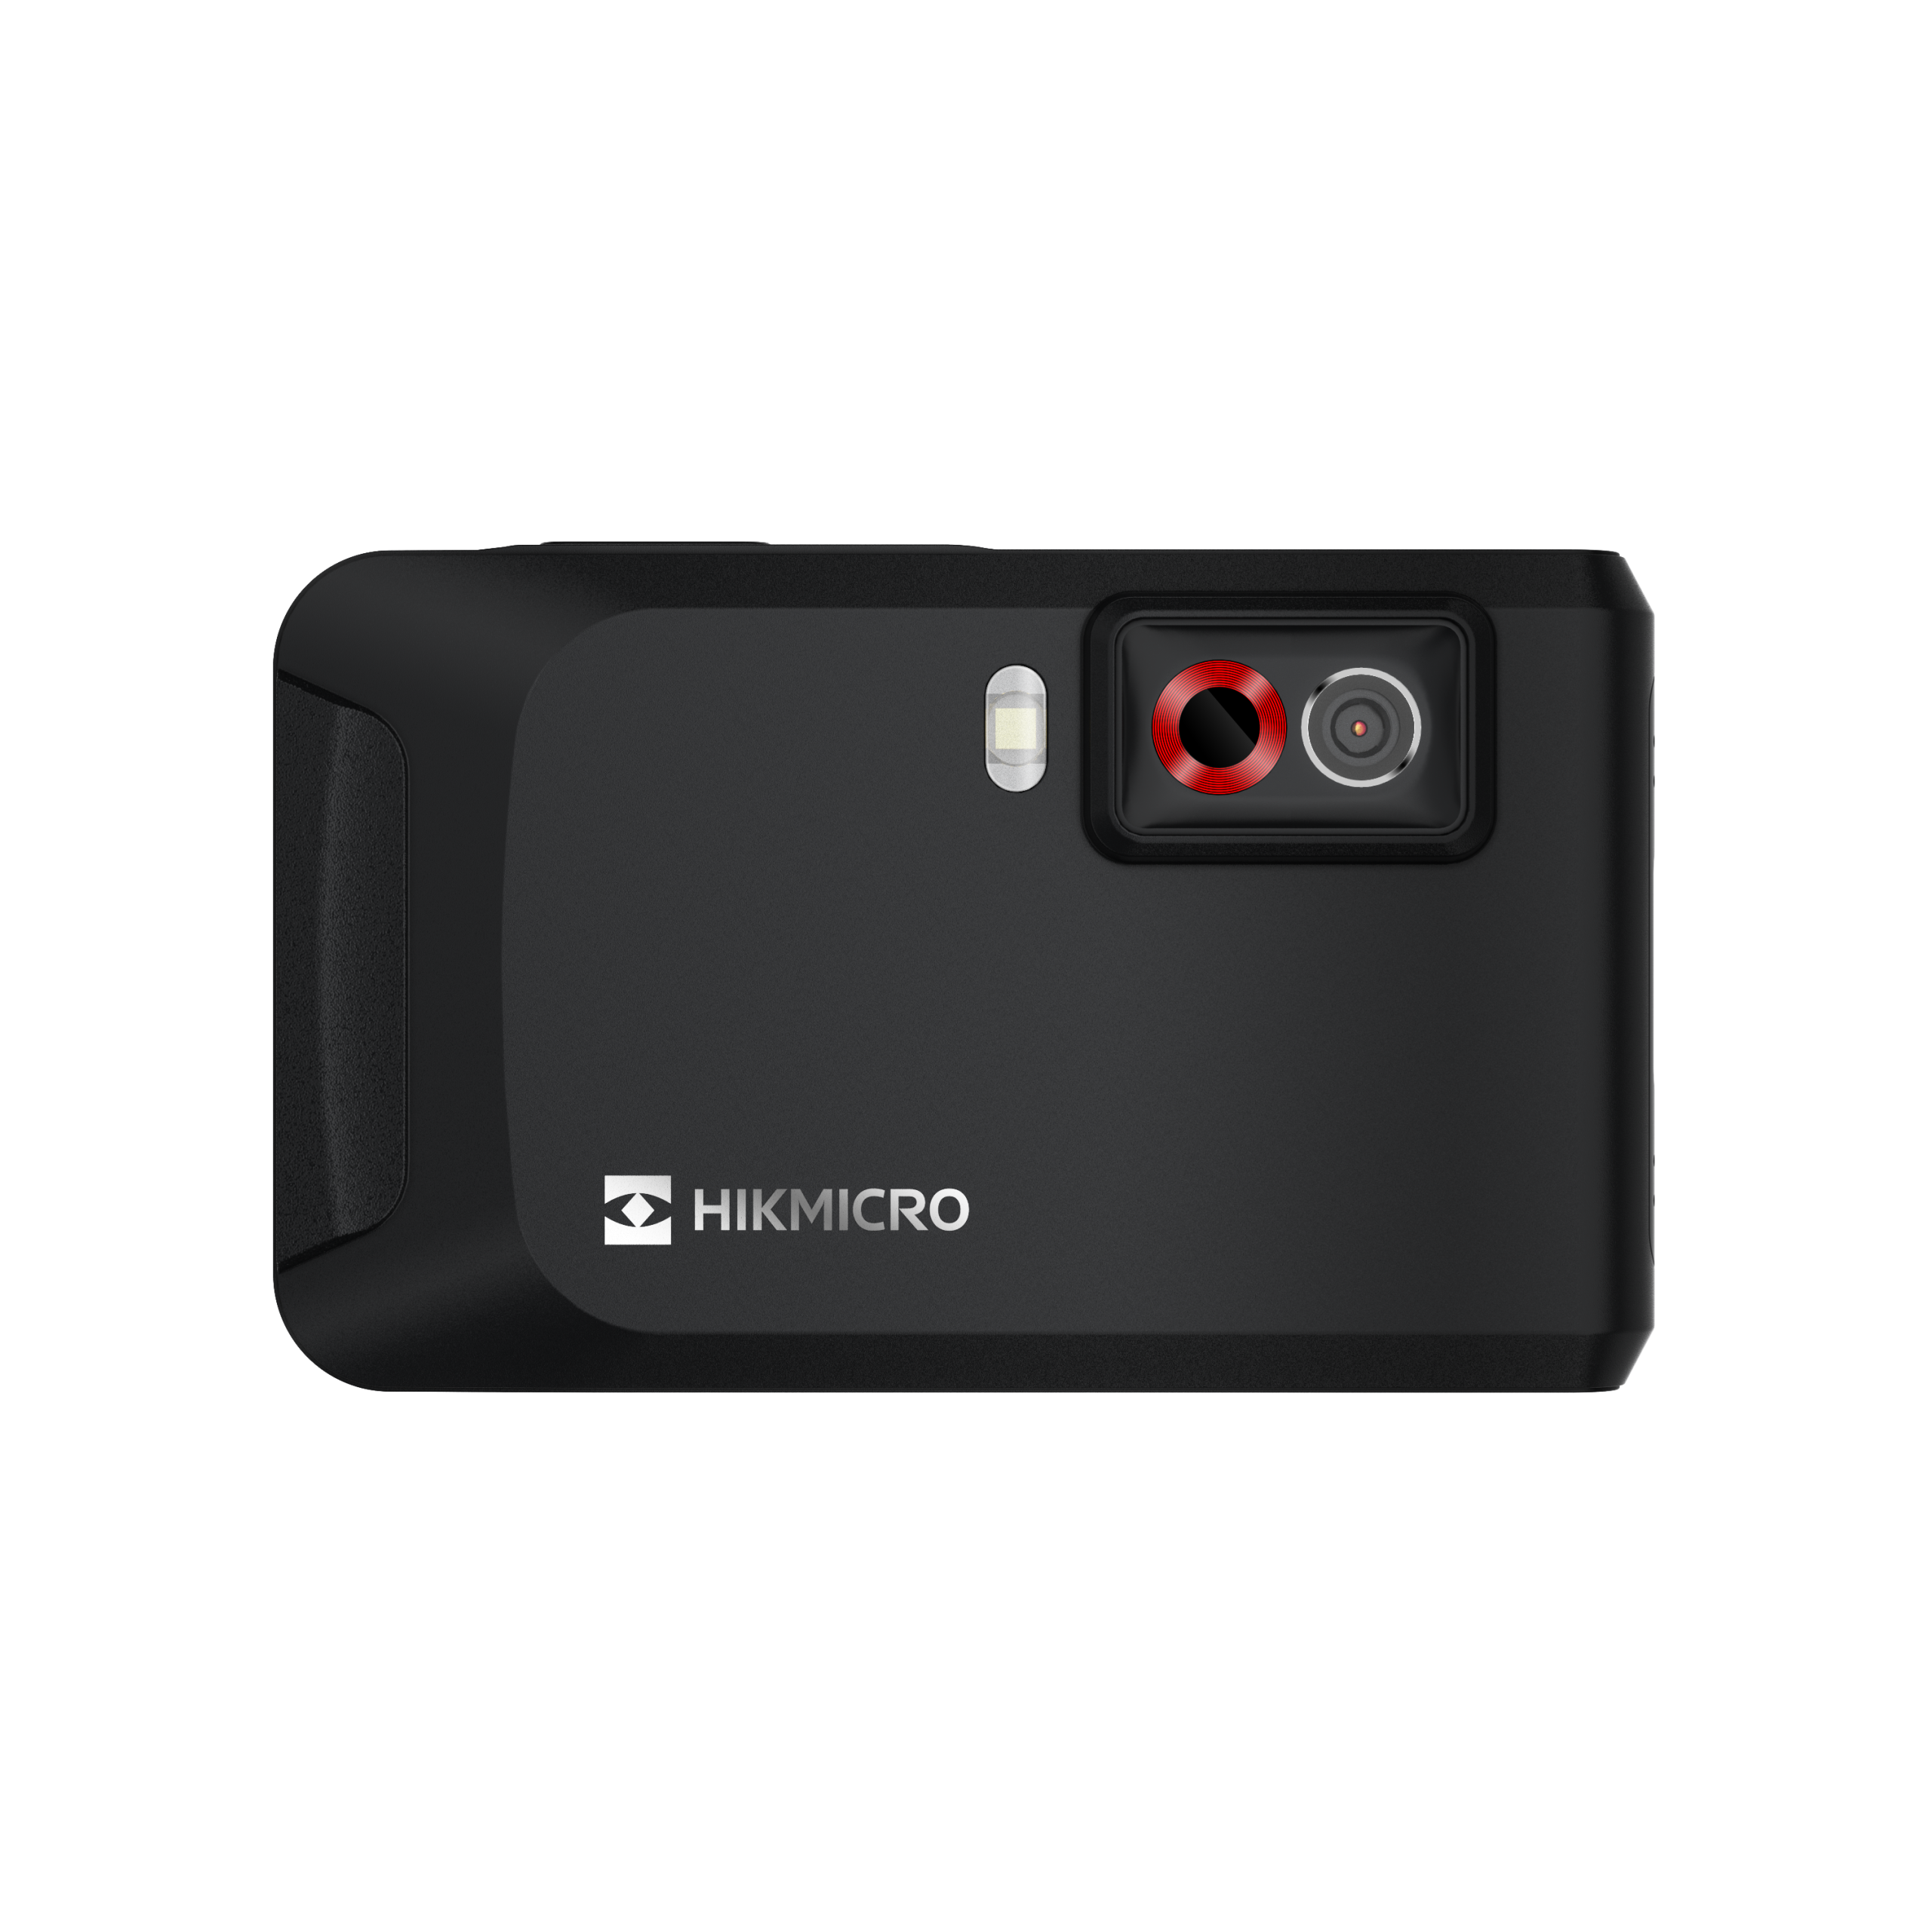 HIKMICRO Pocket2 Pocket Thermography Camera